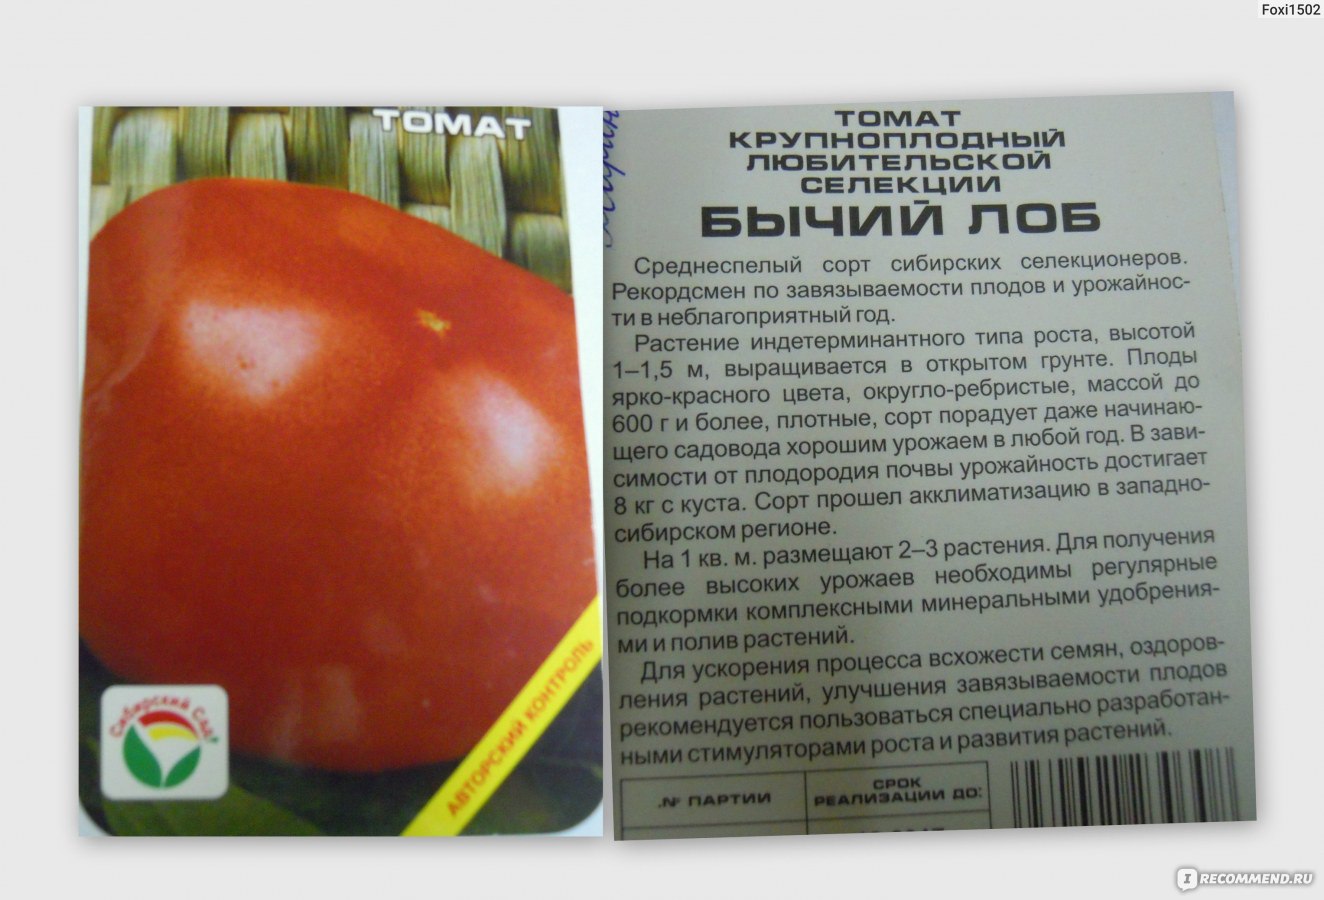 Характеристика и описание томата Мясистый сахаристый, выращивание сорта